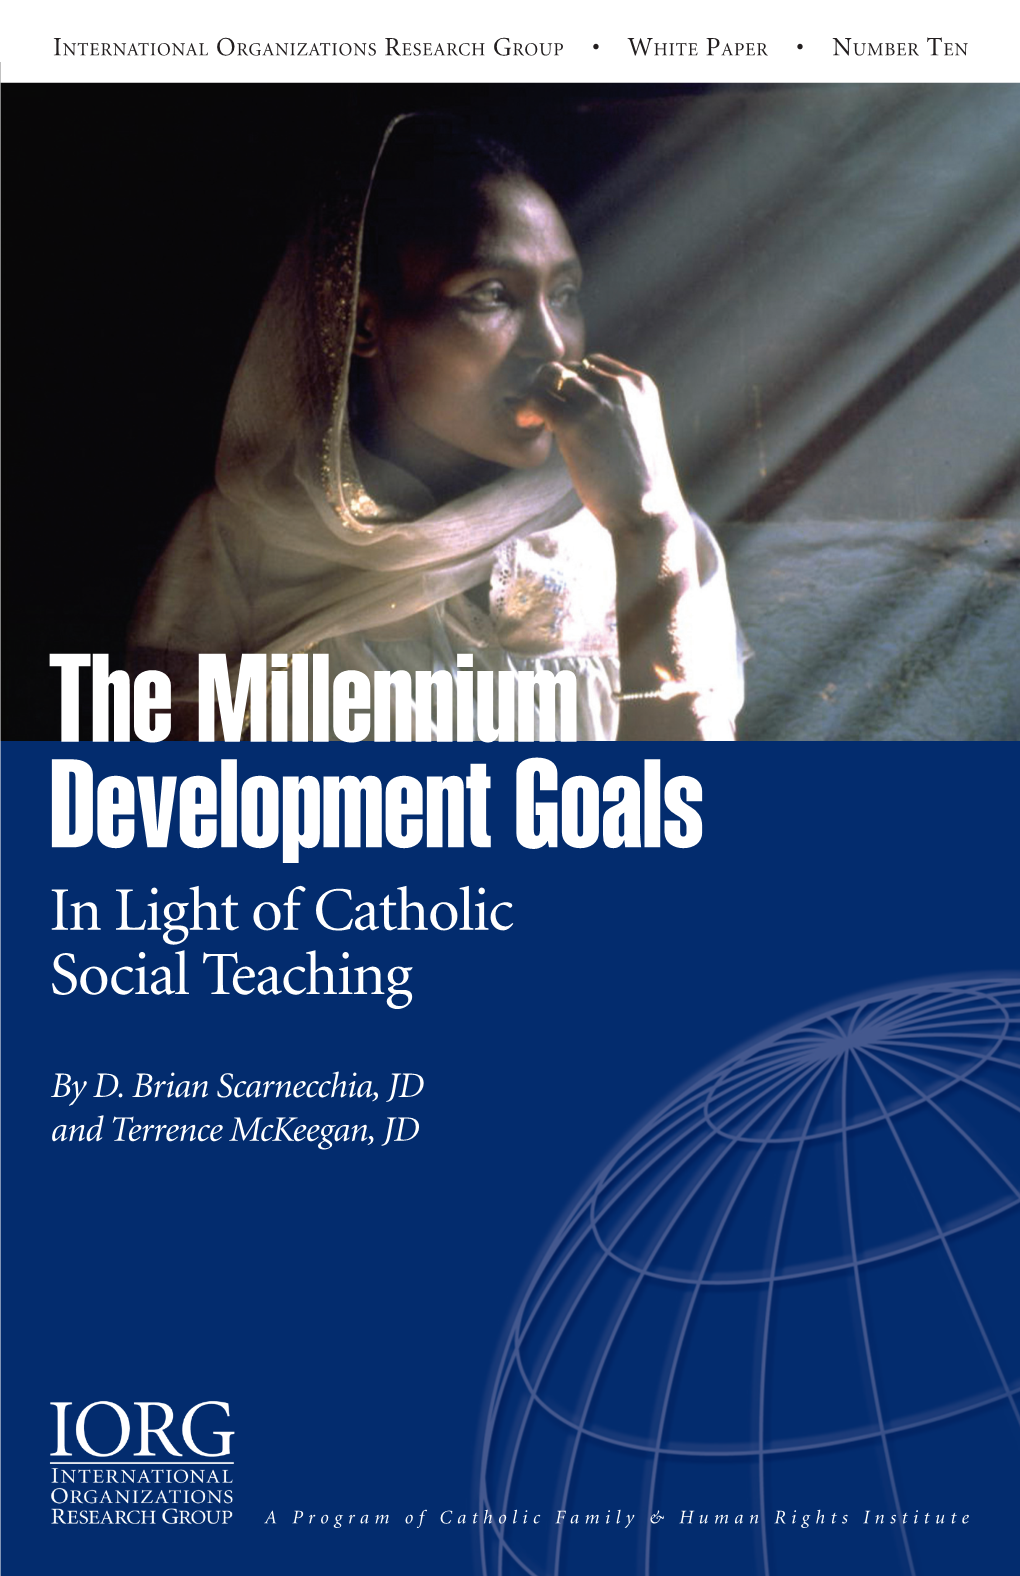 The Millennium Development Goals in Light of Catholic Social Teaching